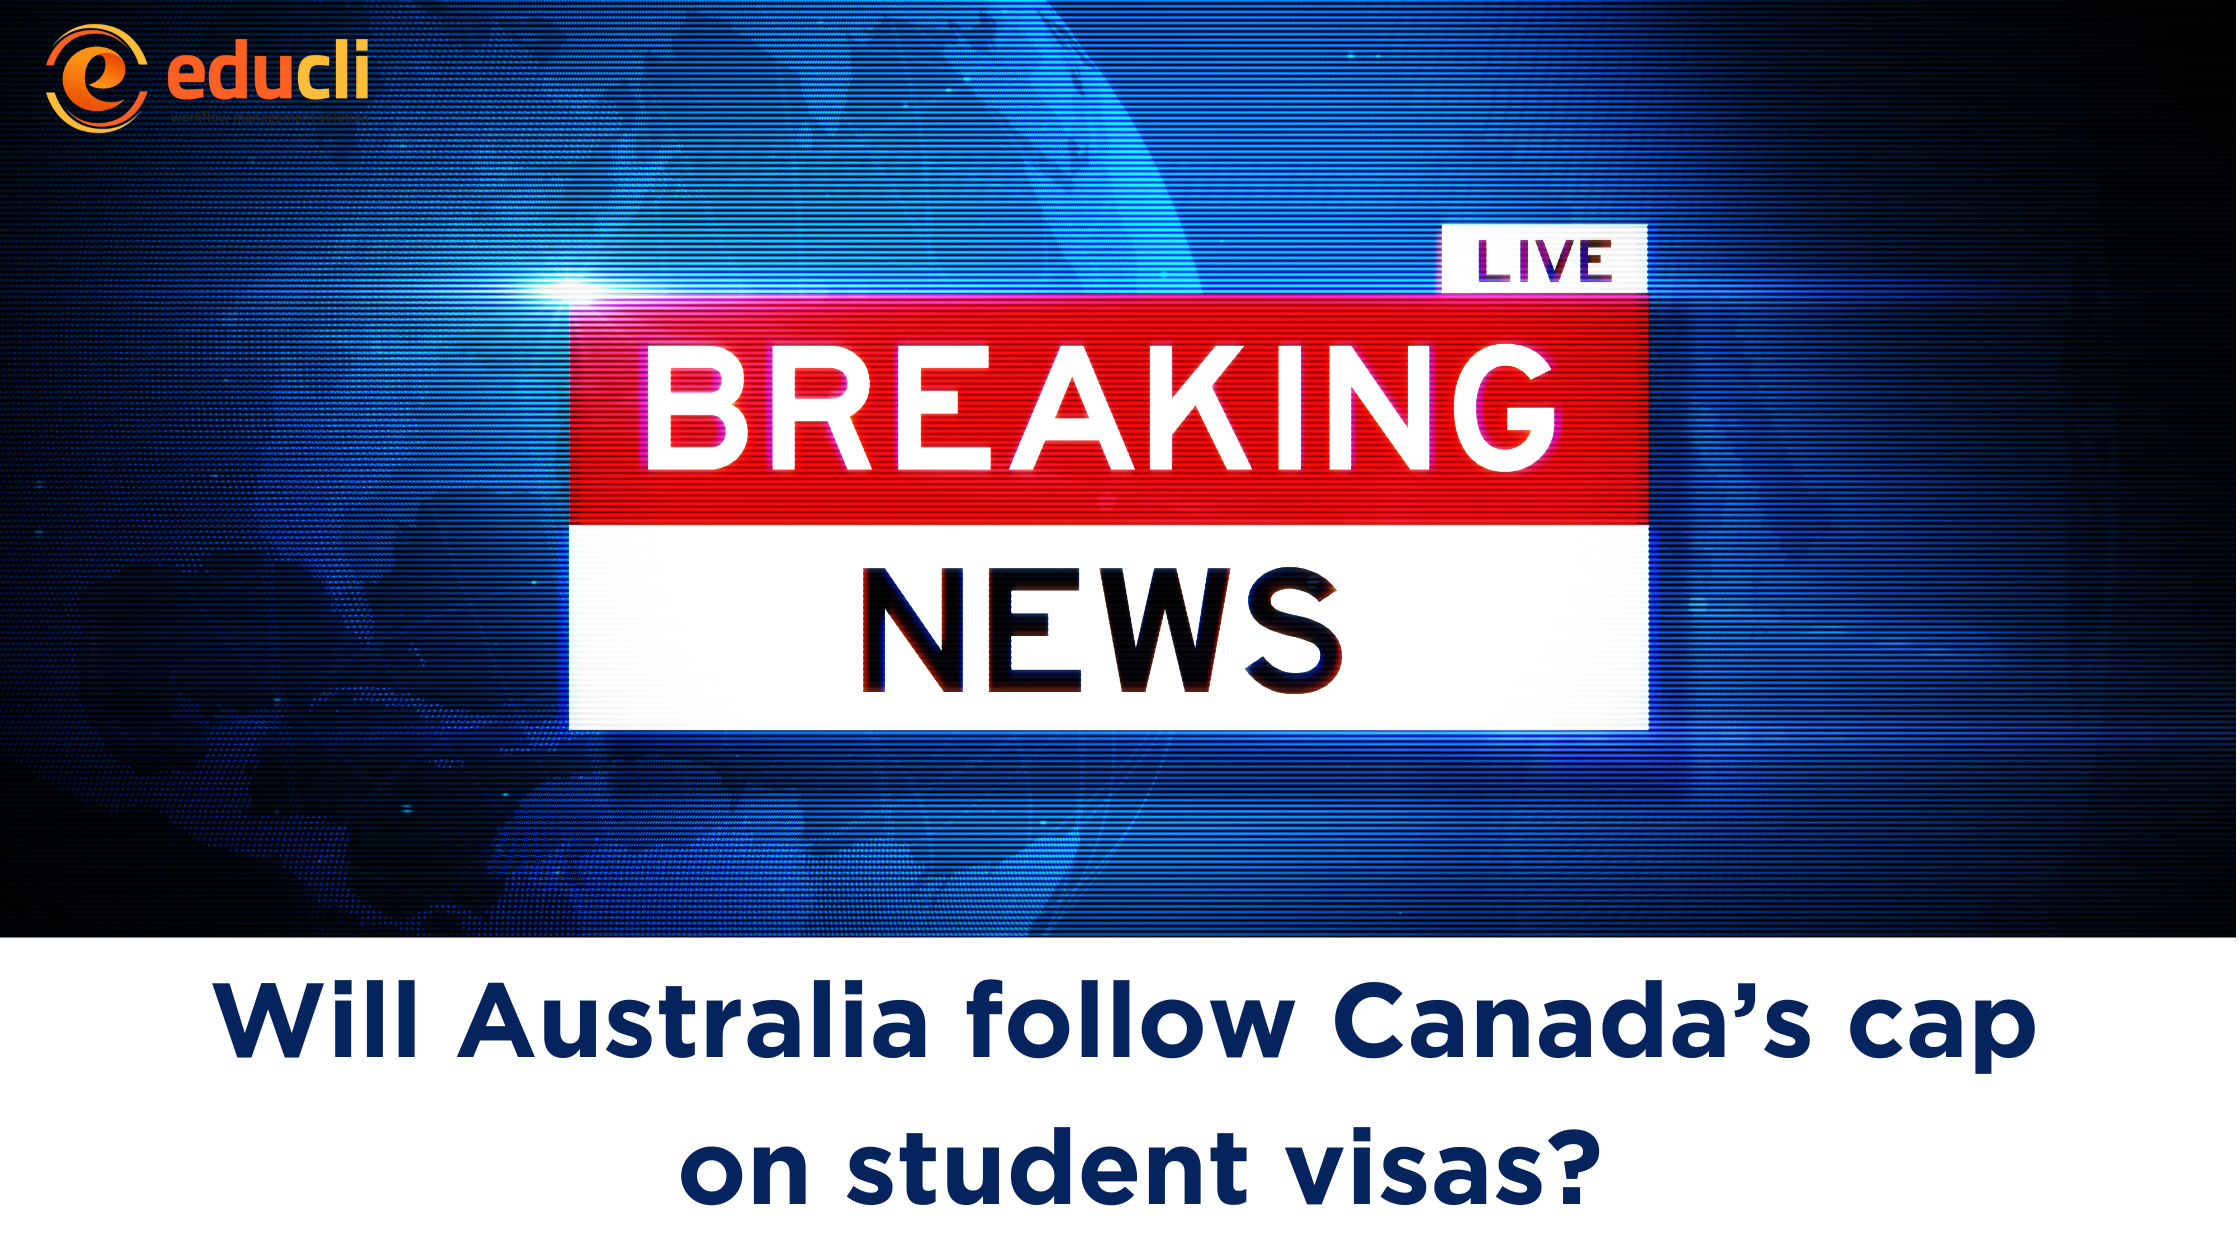 WILL AUSTRALIA FOLLOW CANADA’S CAP ON STUDENT VISAS?